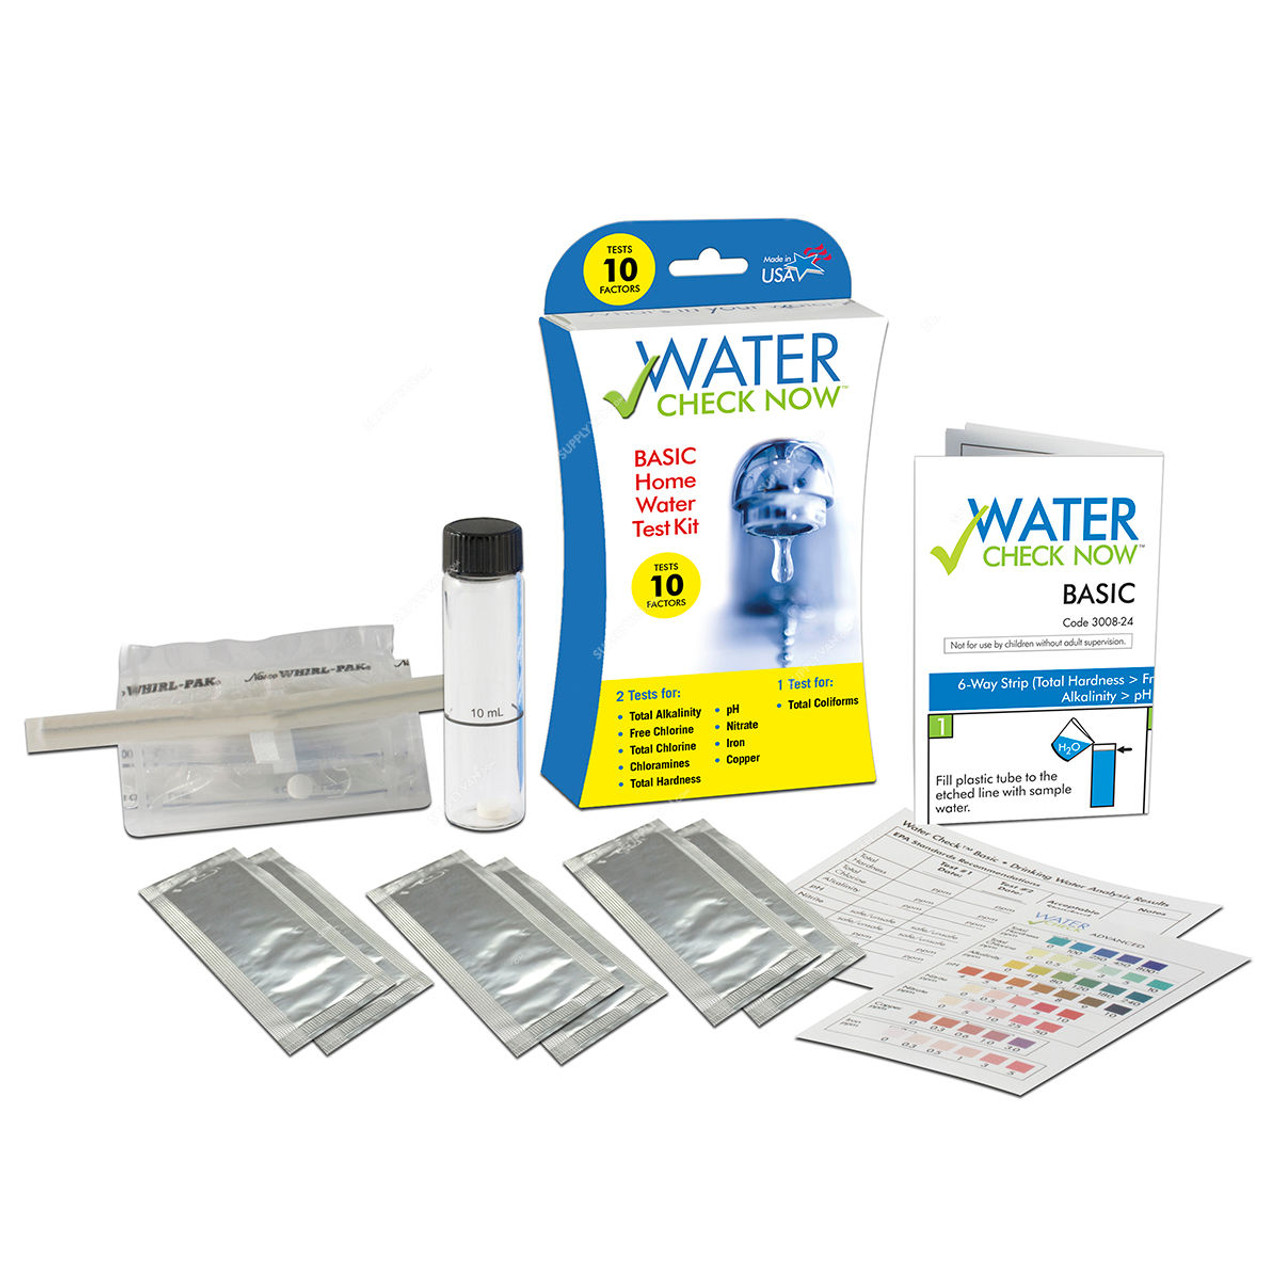 Набор тестов для воды. Медицинские товары. Basic Test Kit trousse Banalyse. Water check еда. Basic Test Kit trousse Banalyse PNG.